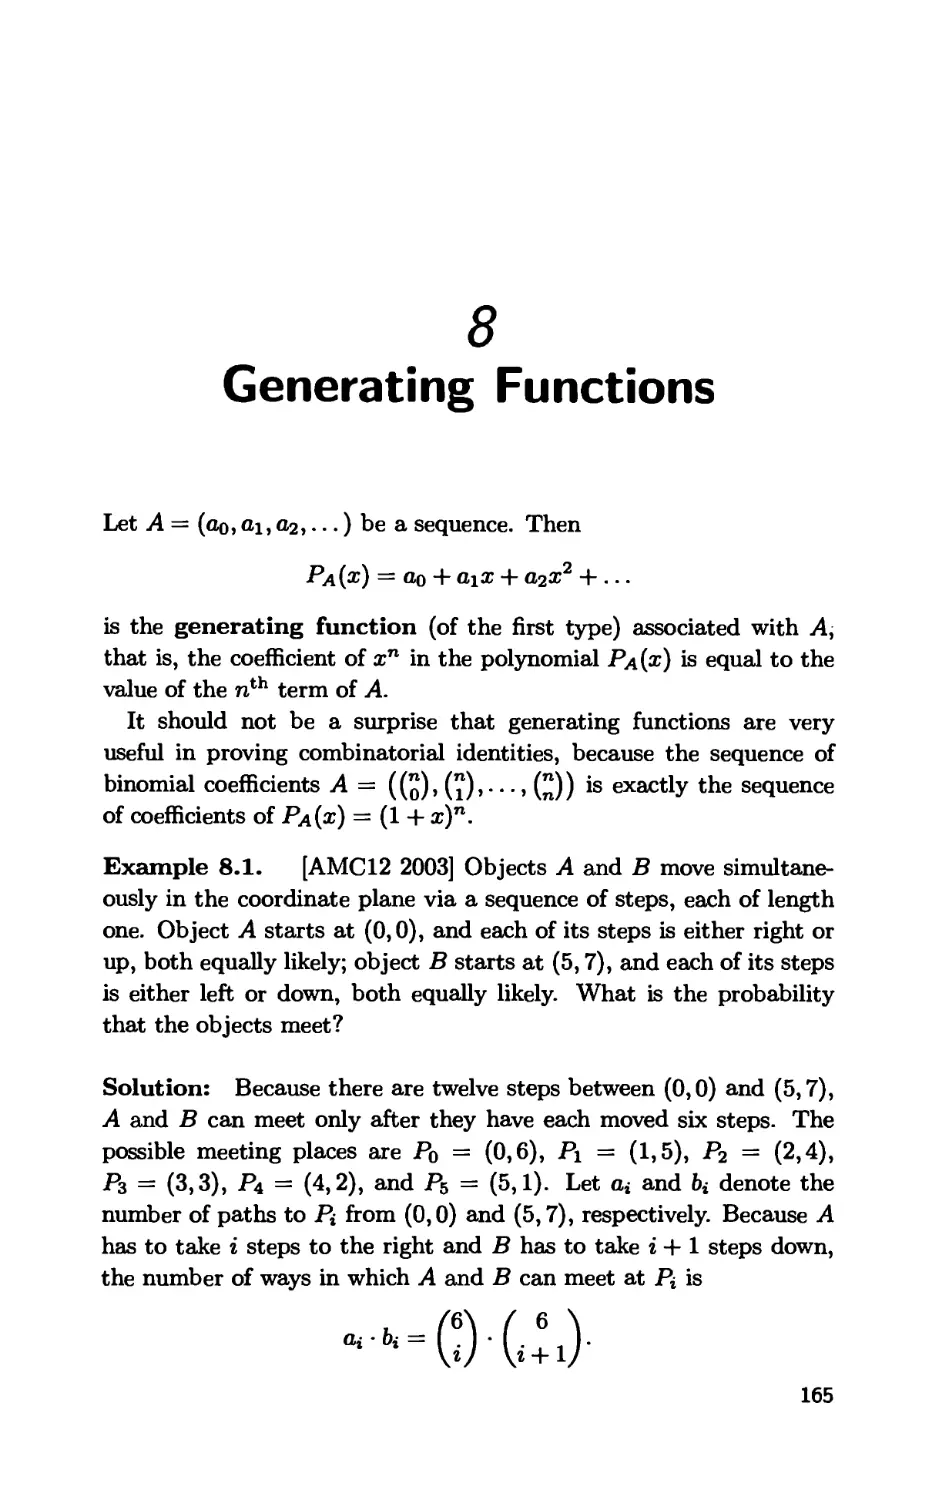 8. Generating Functions